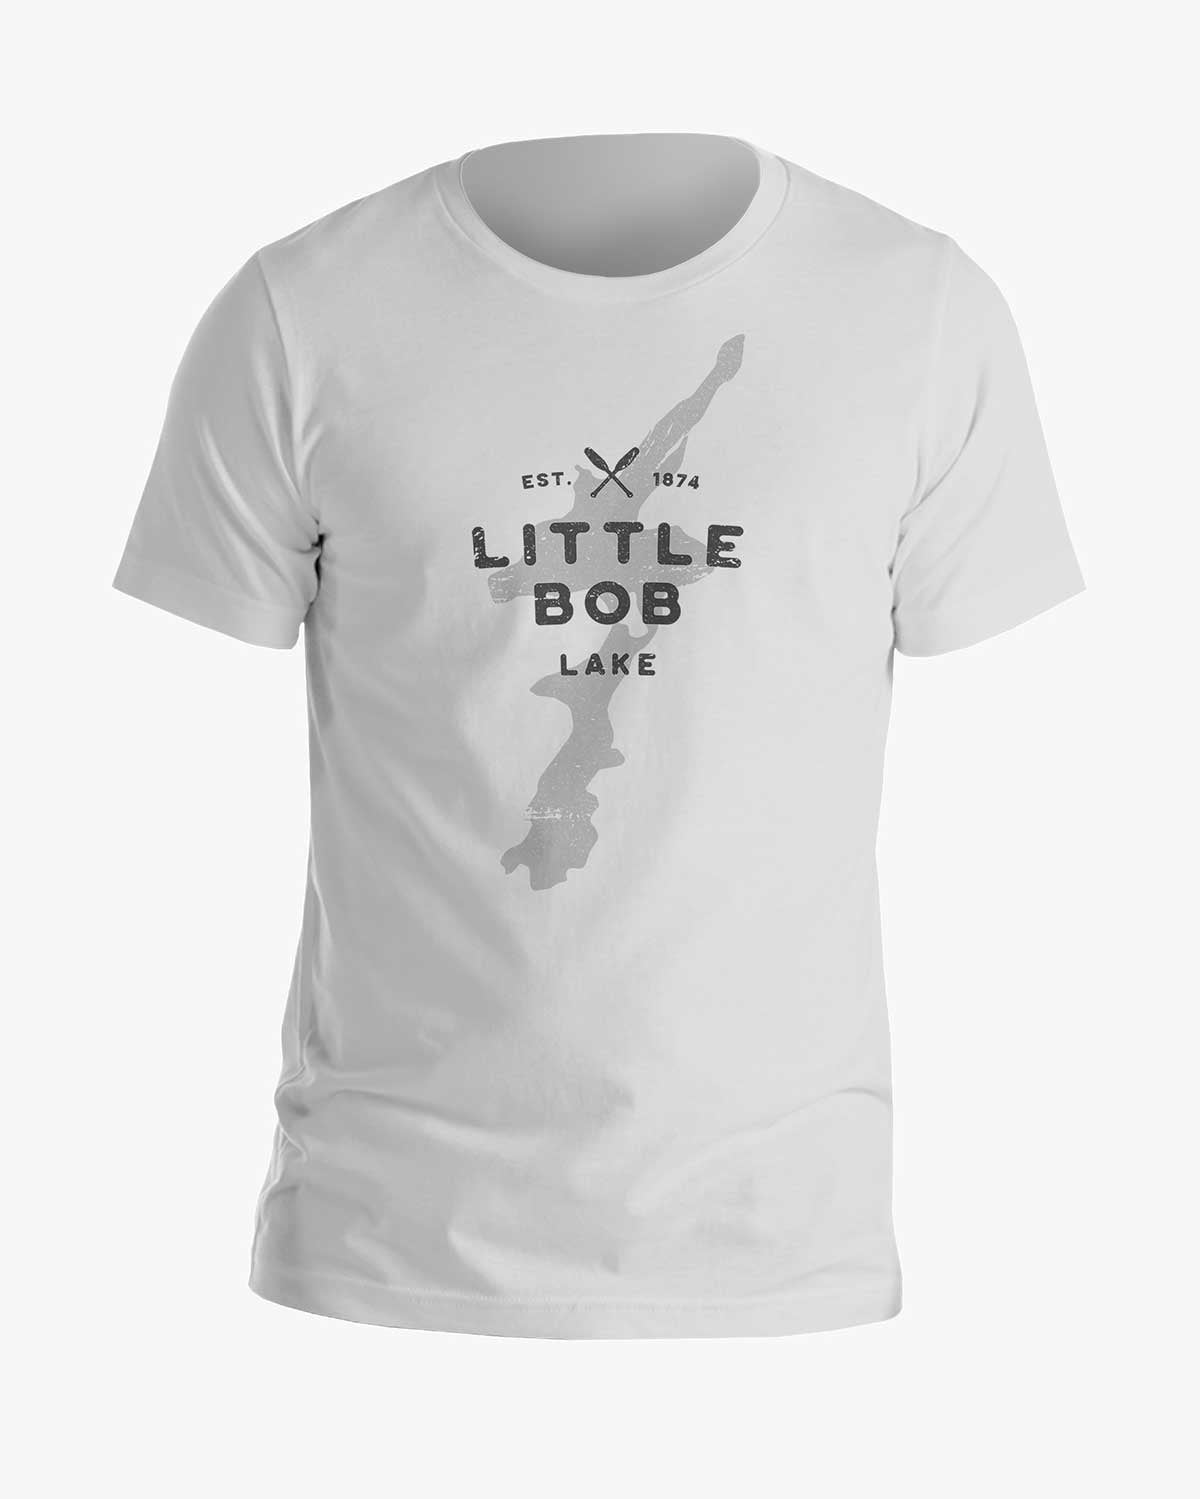 Lake Series - Little Bob Lake - Tee